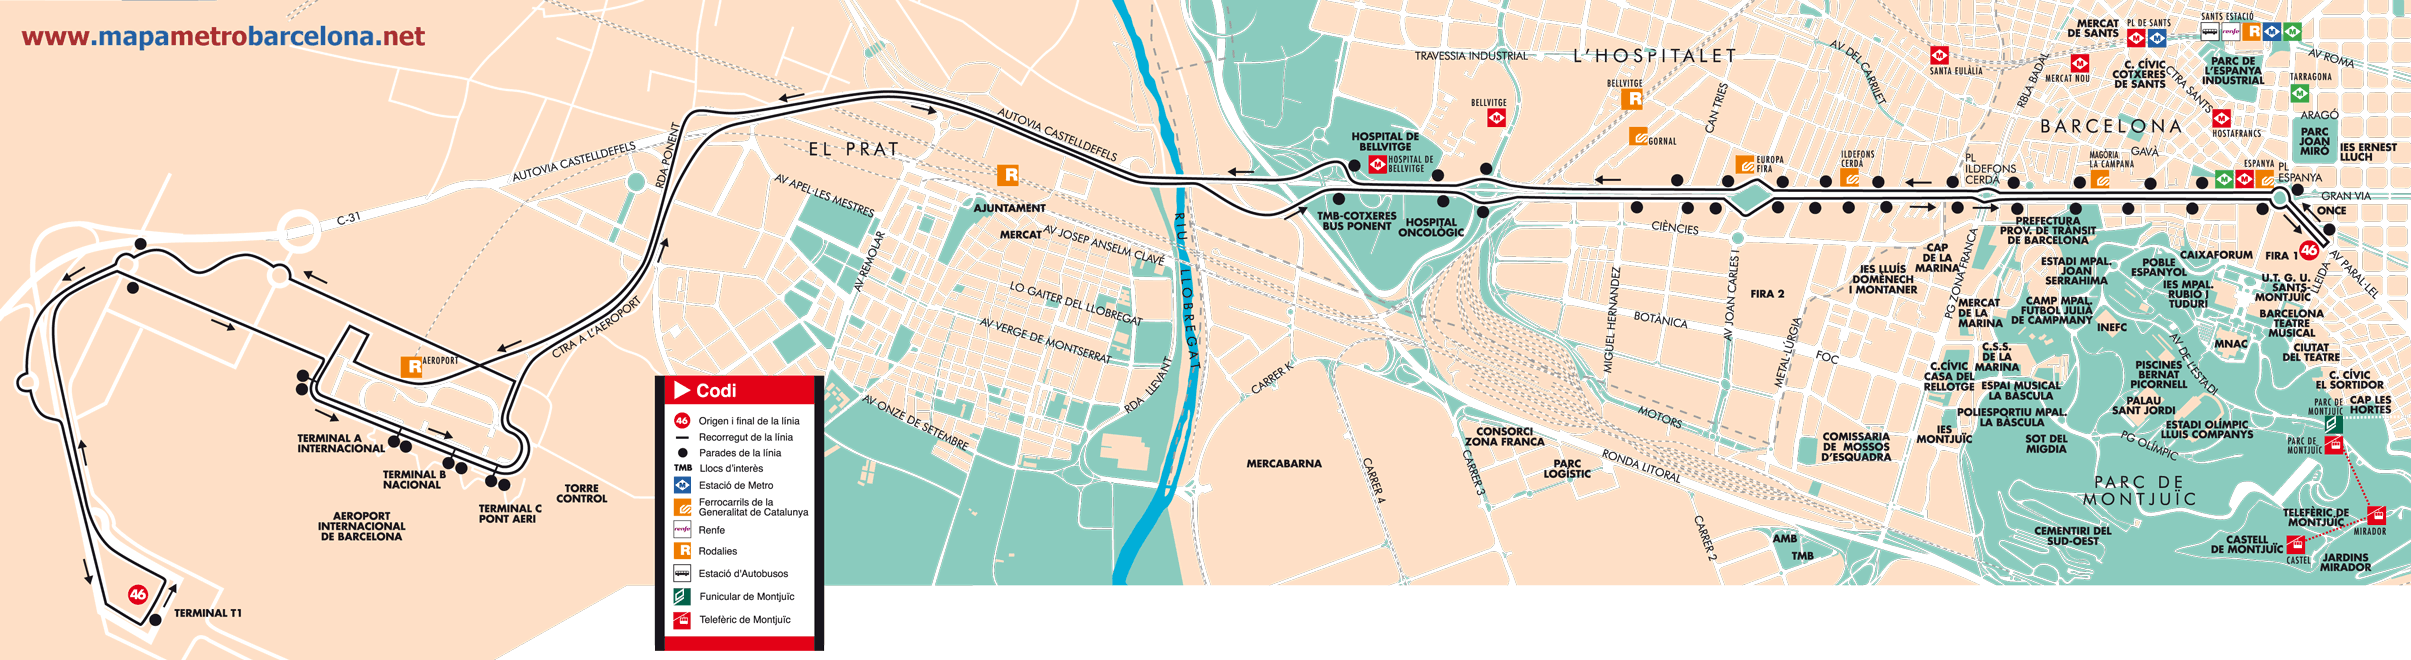 Mapa autobus barcelona línea 46